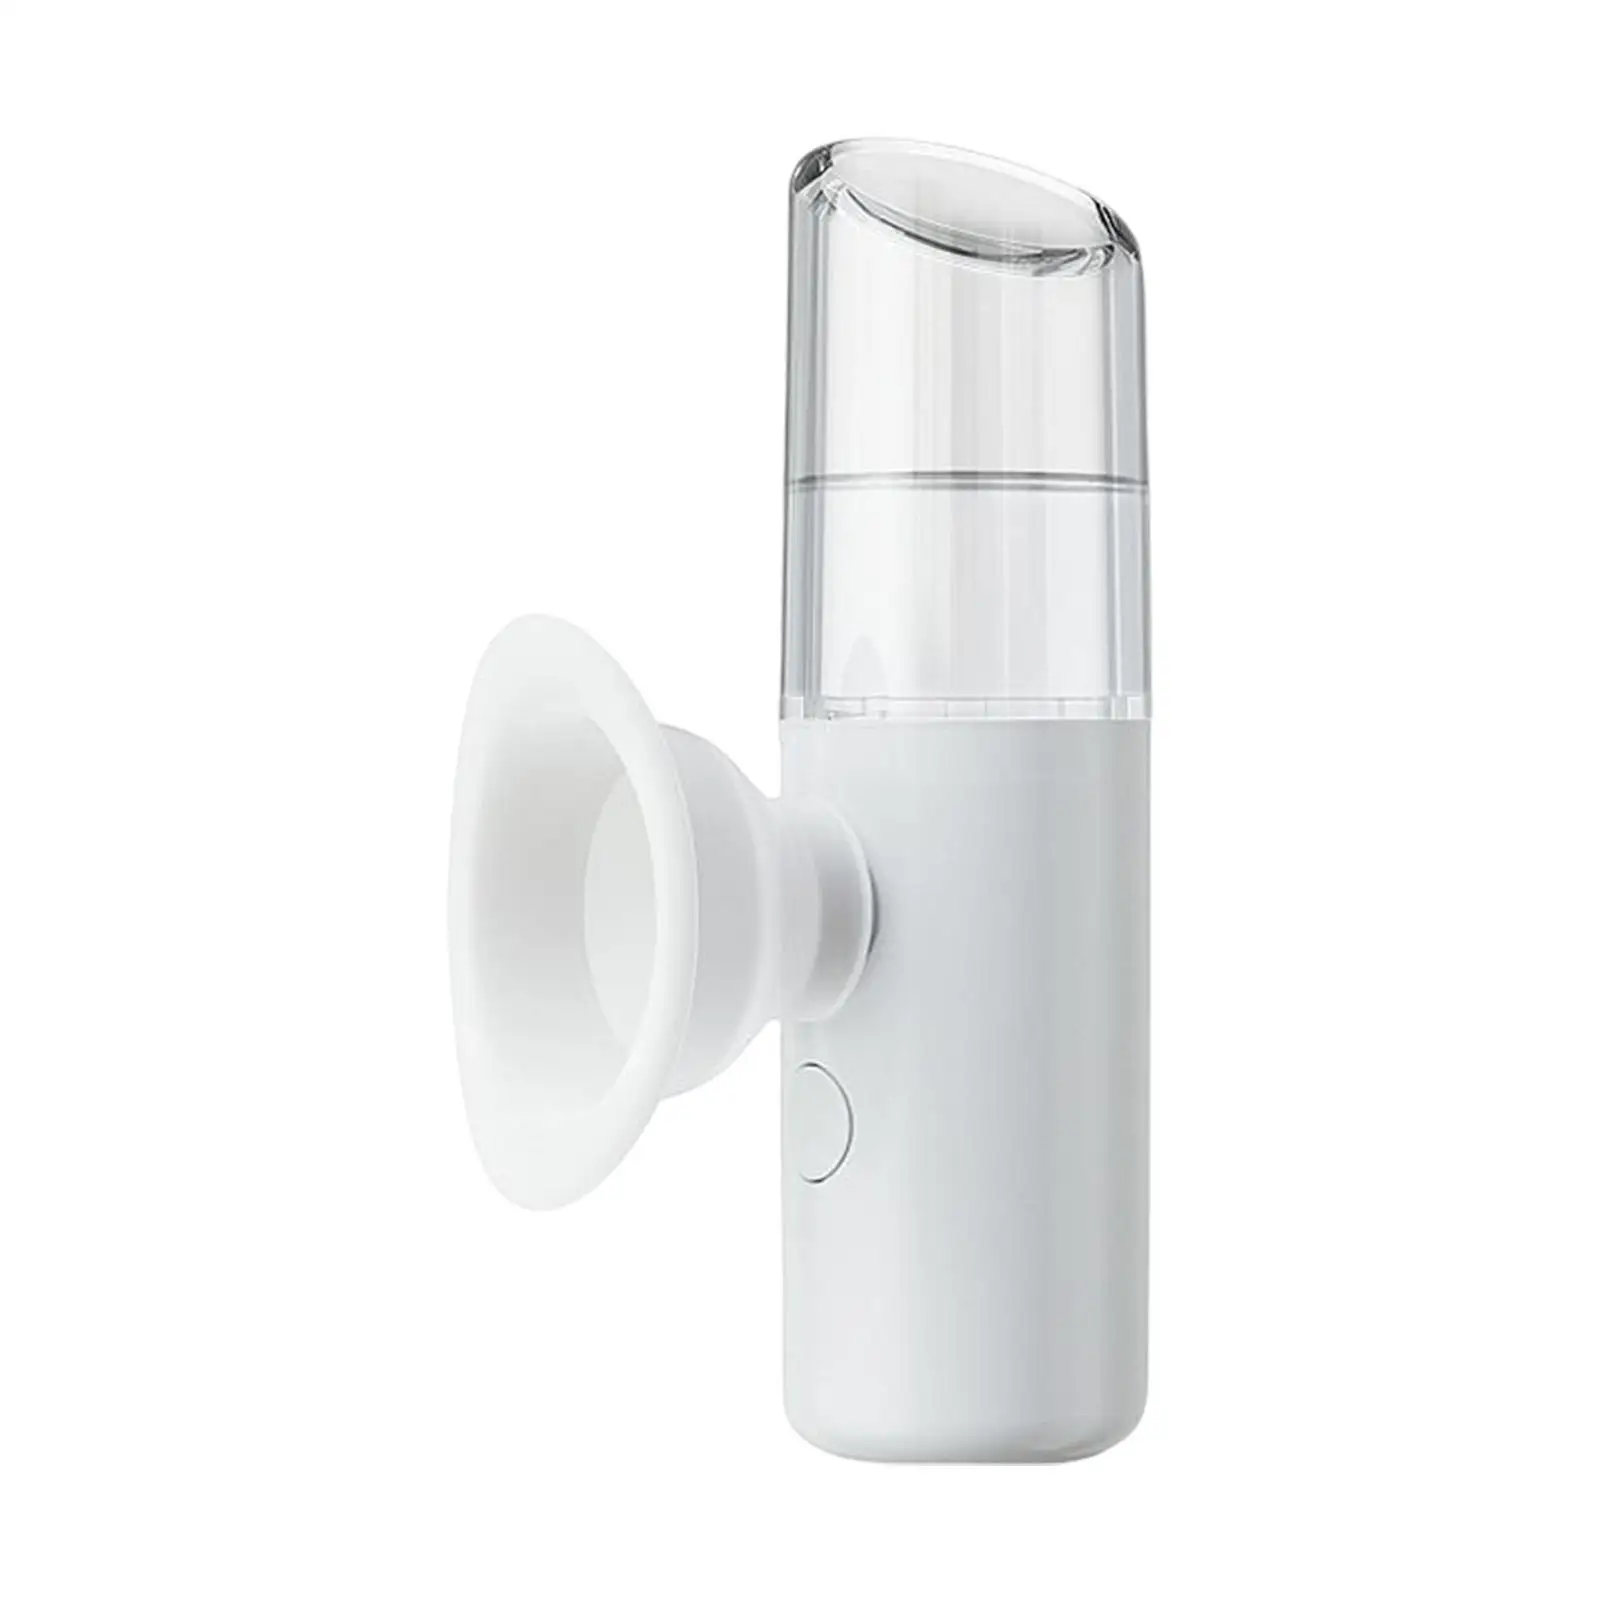 2 in 1 Nano Facial Mister Eye Sprayer 25ml Water Tank Rechargeable Face Hydrating Mini Moisturizing Facial Steamer